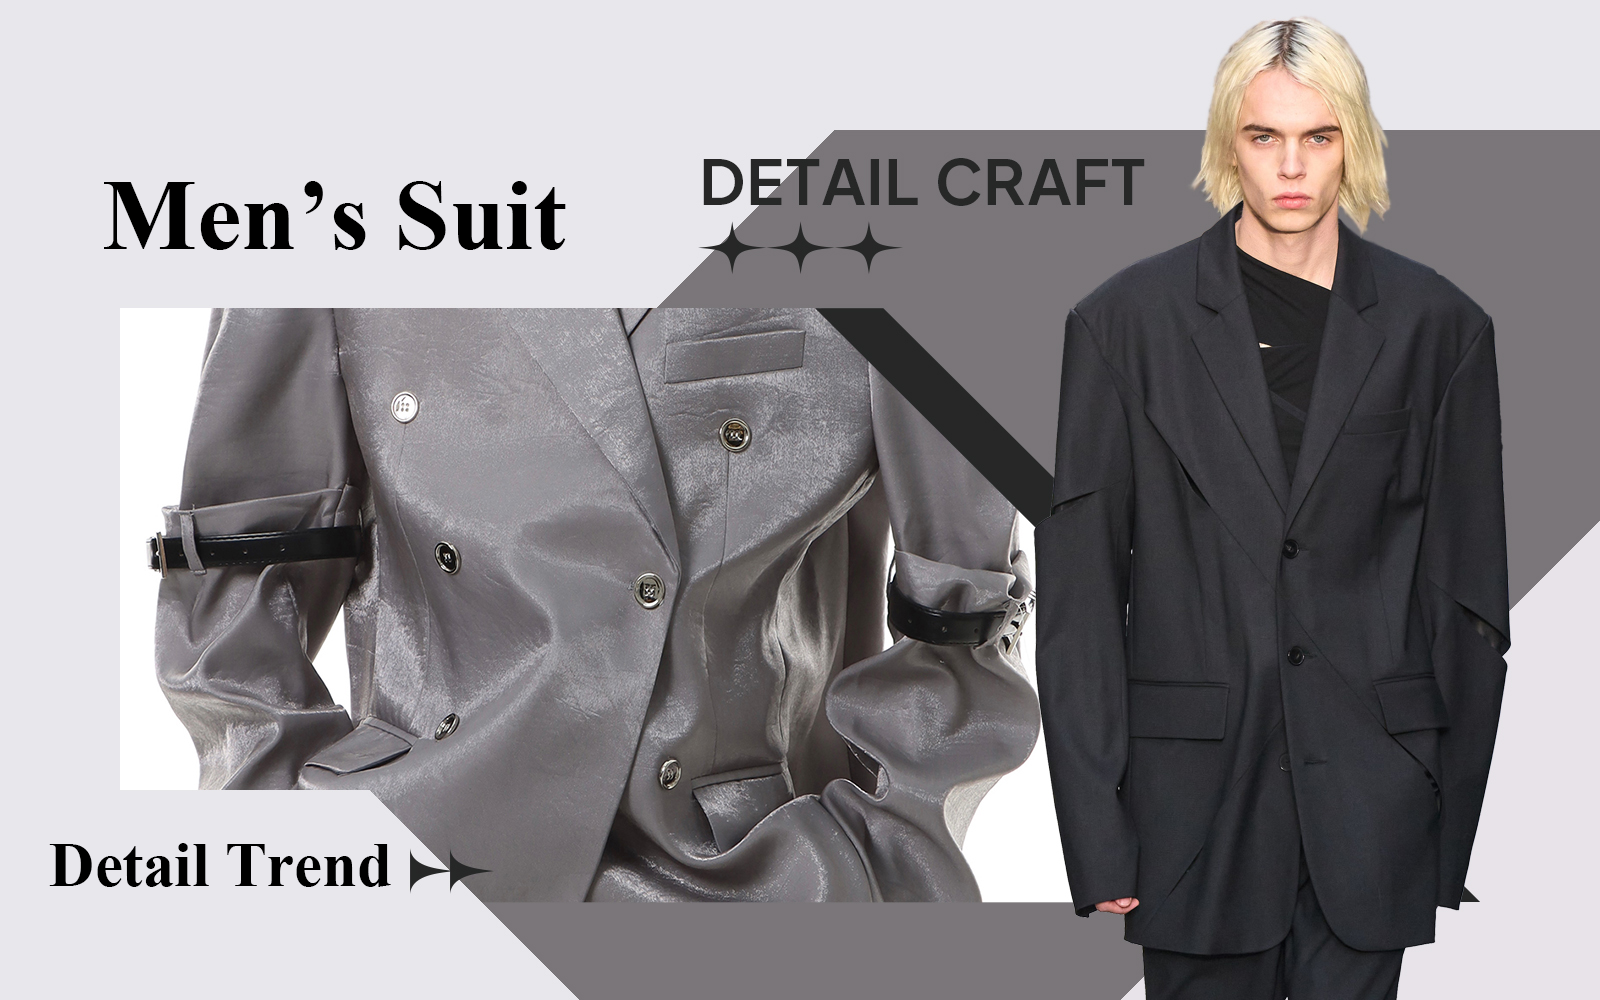 Emerging Design -- The Detail & Craft Trend for Men's Suit